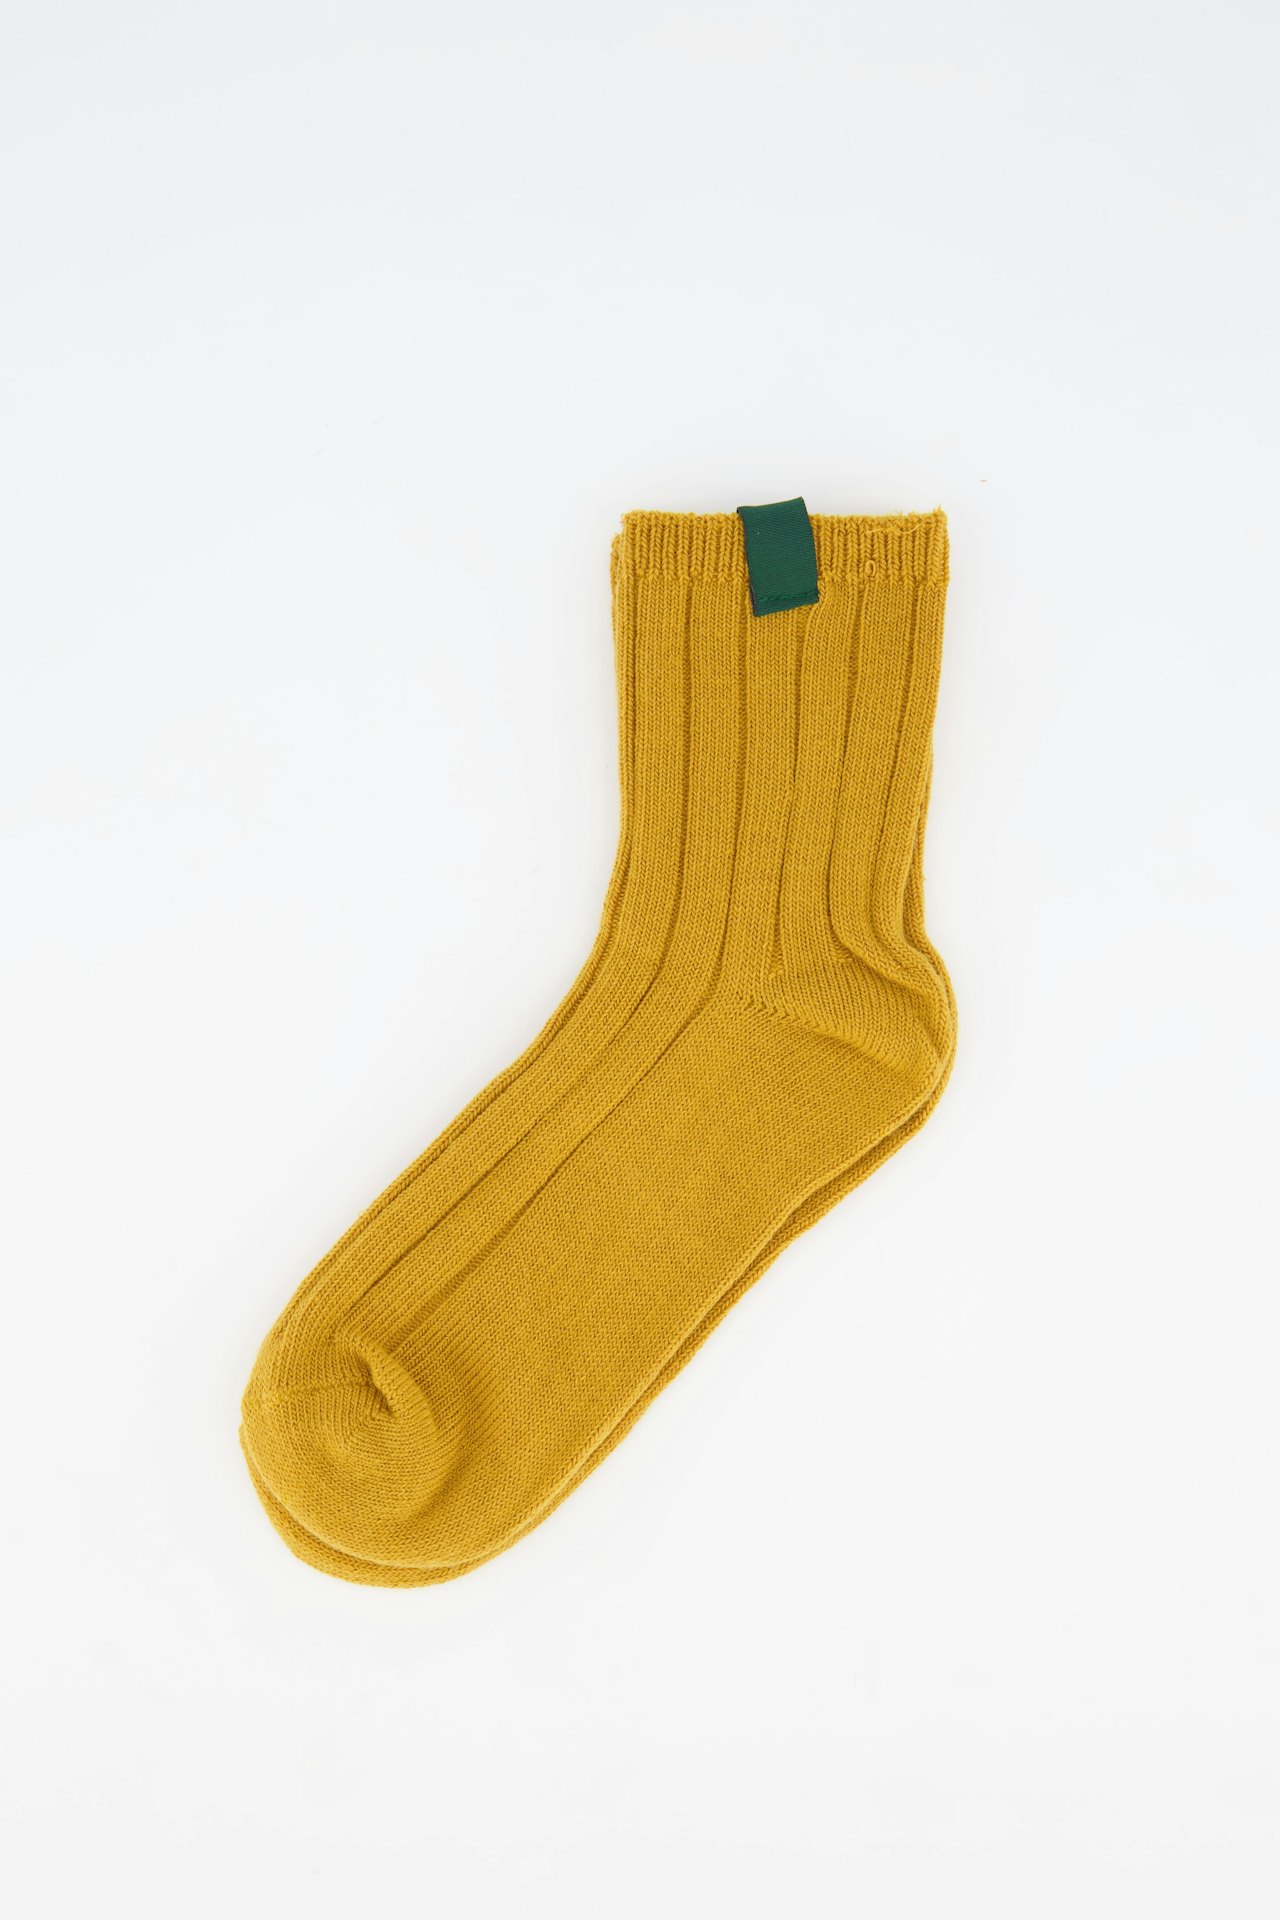 Mustard Ankle Socks - $2.79 on AliExpress, via Thieve